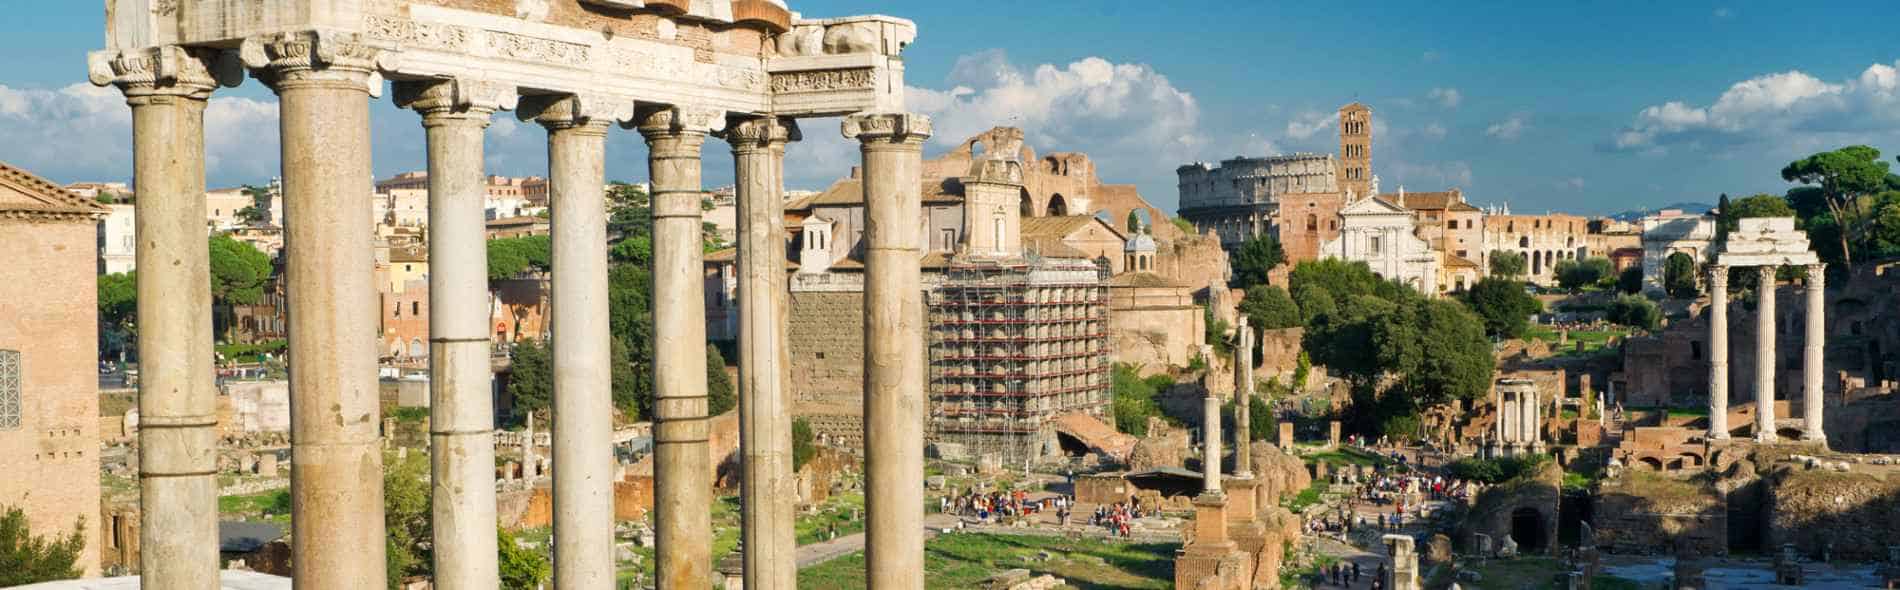 Deal 20% off Colosseum tour